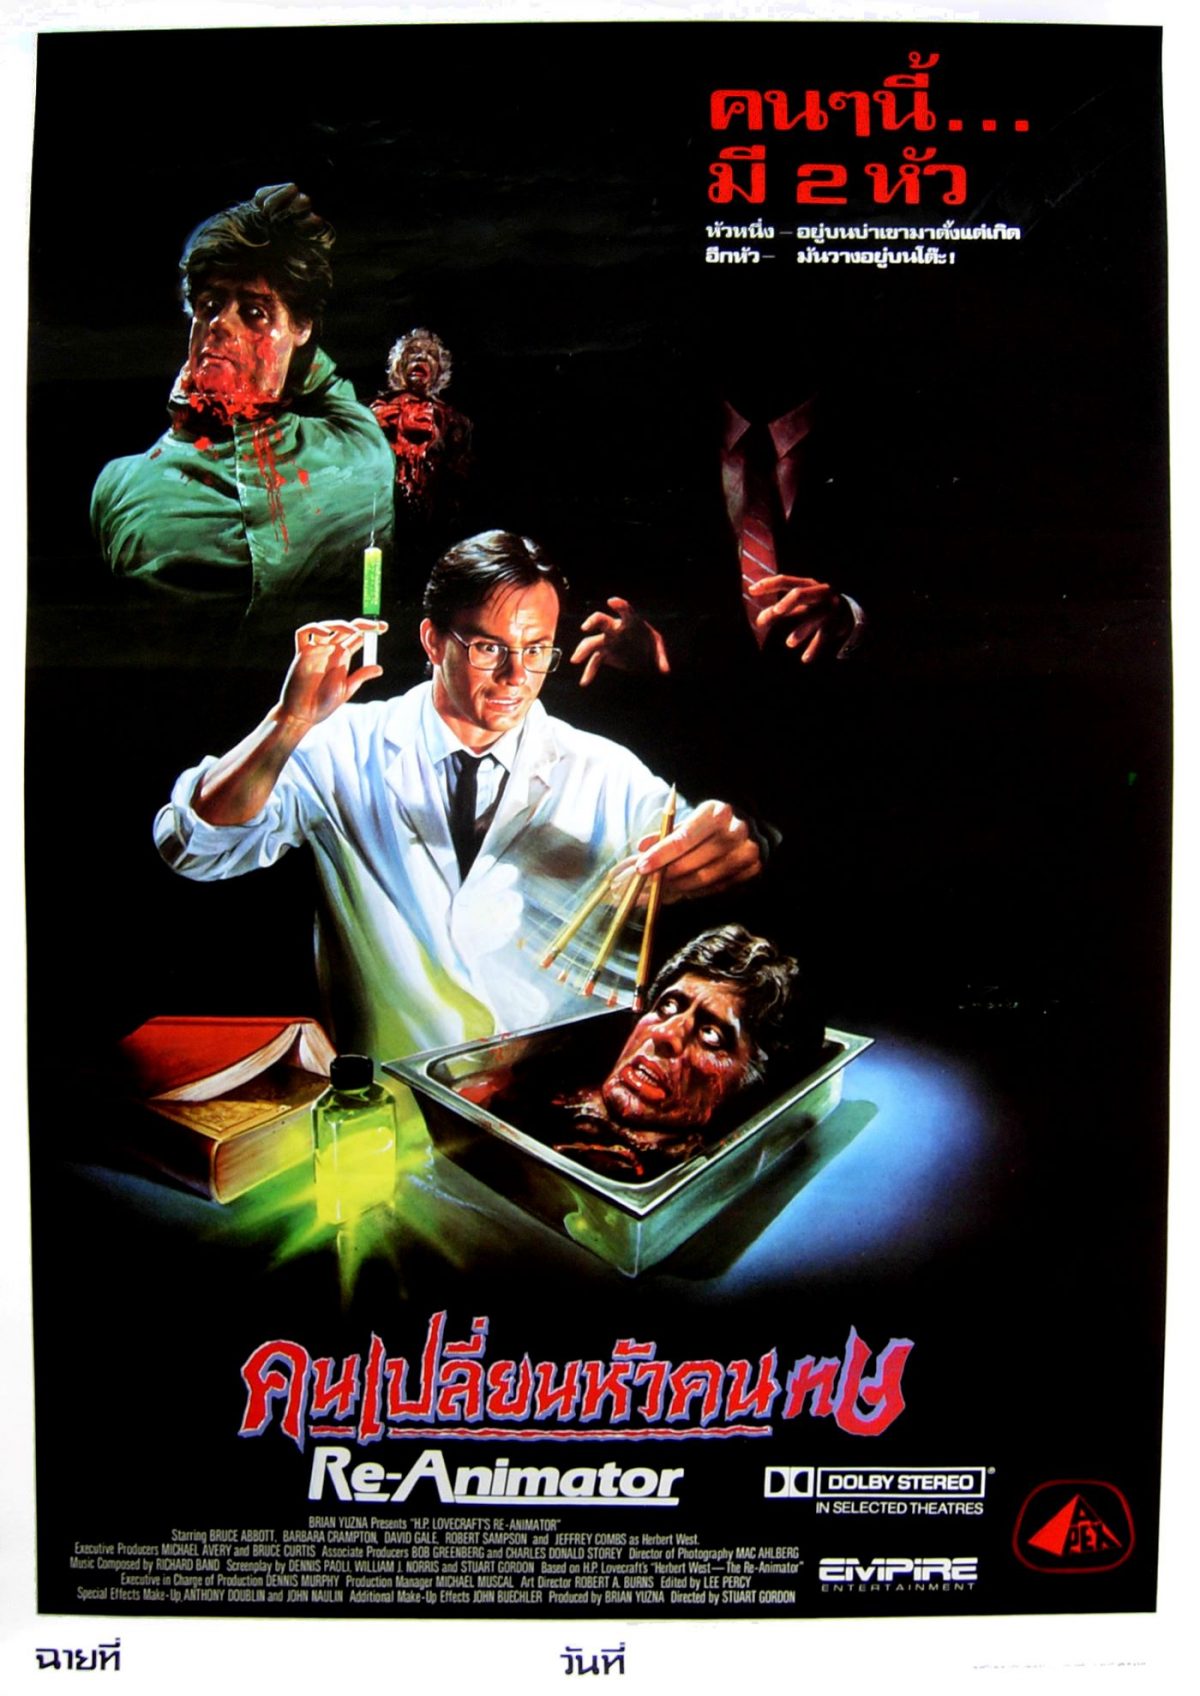 Thailand, movie posters, artwork, Reanimator, 1980s